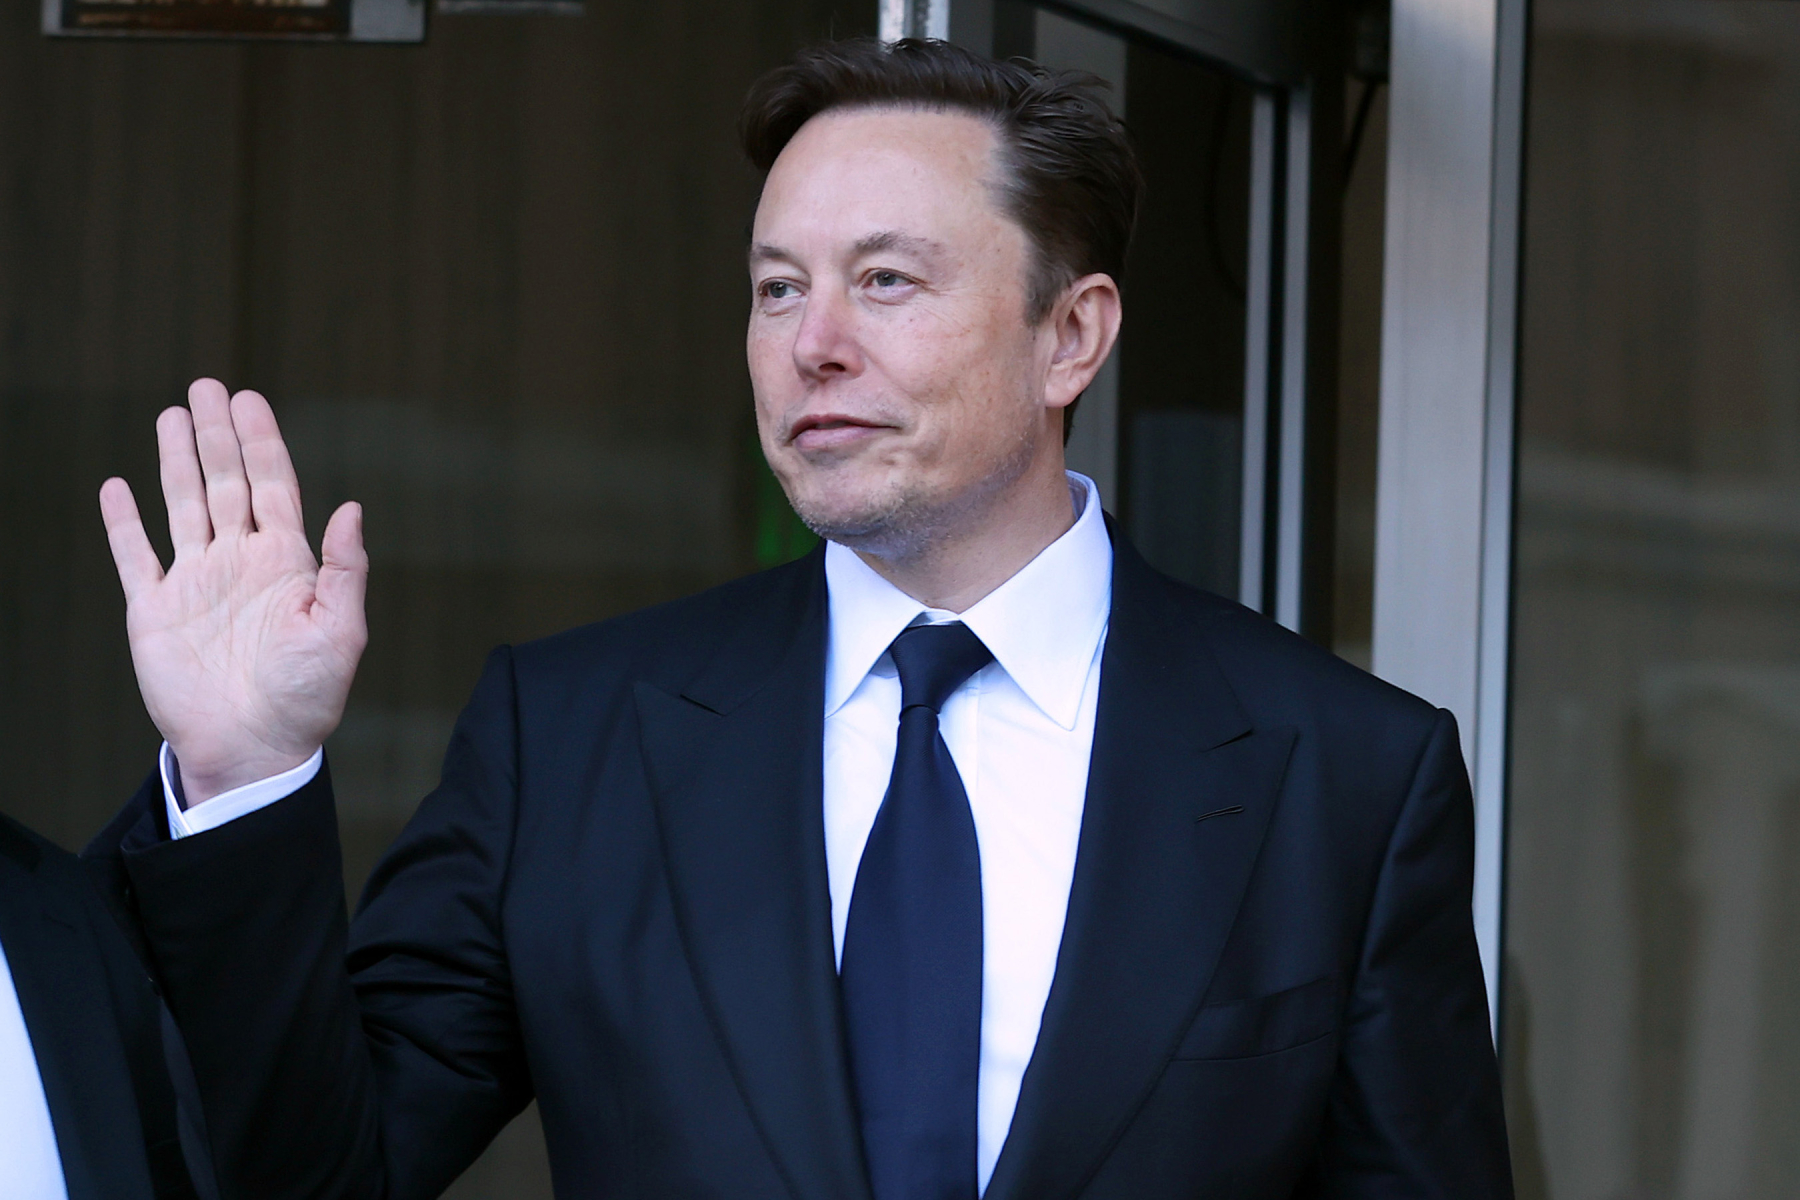 Elon Musk Apologizes for Insensitive Tweet Mocking Laid-Off Tesla Employee